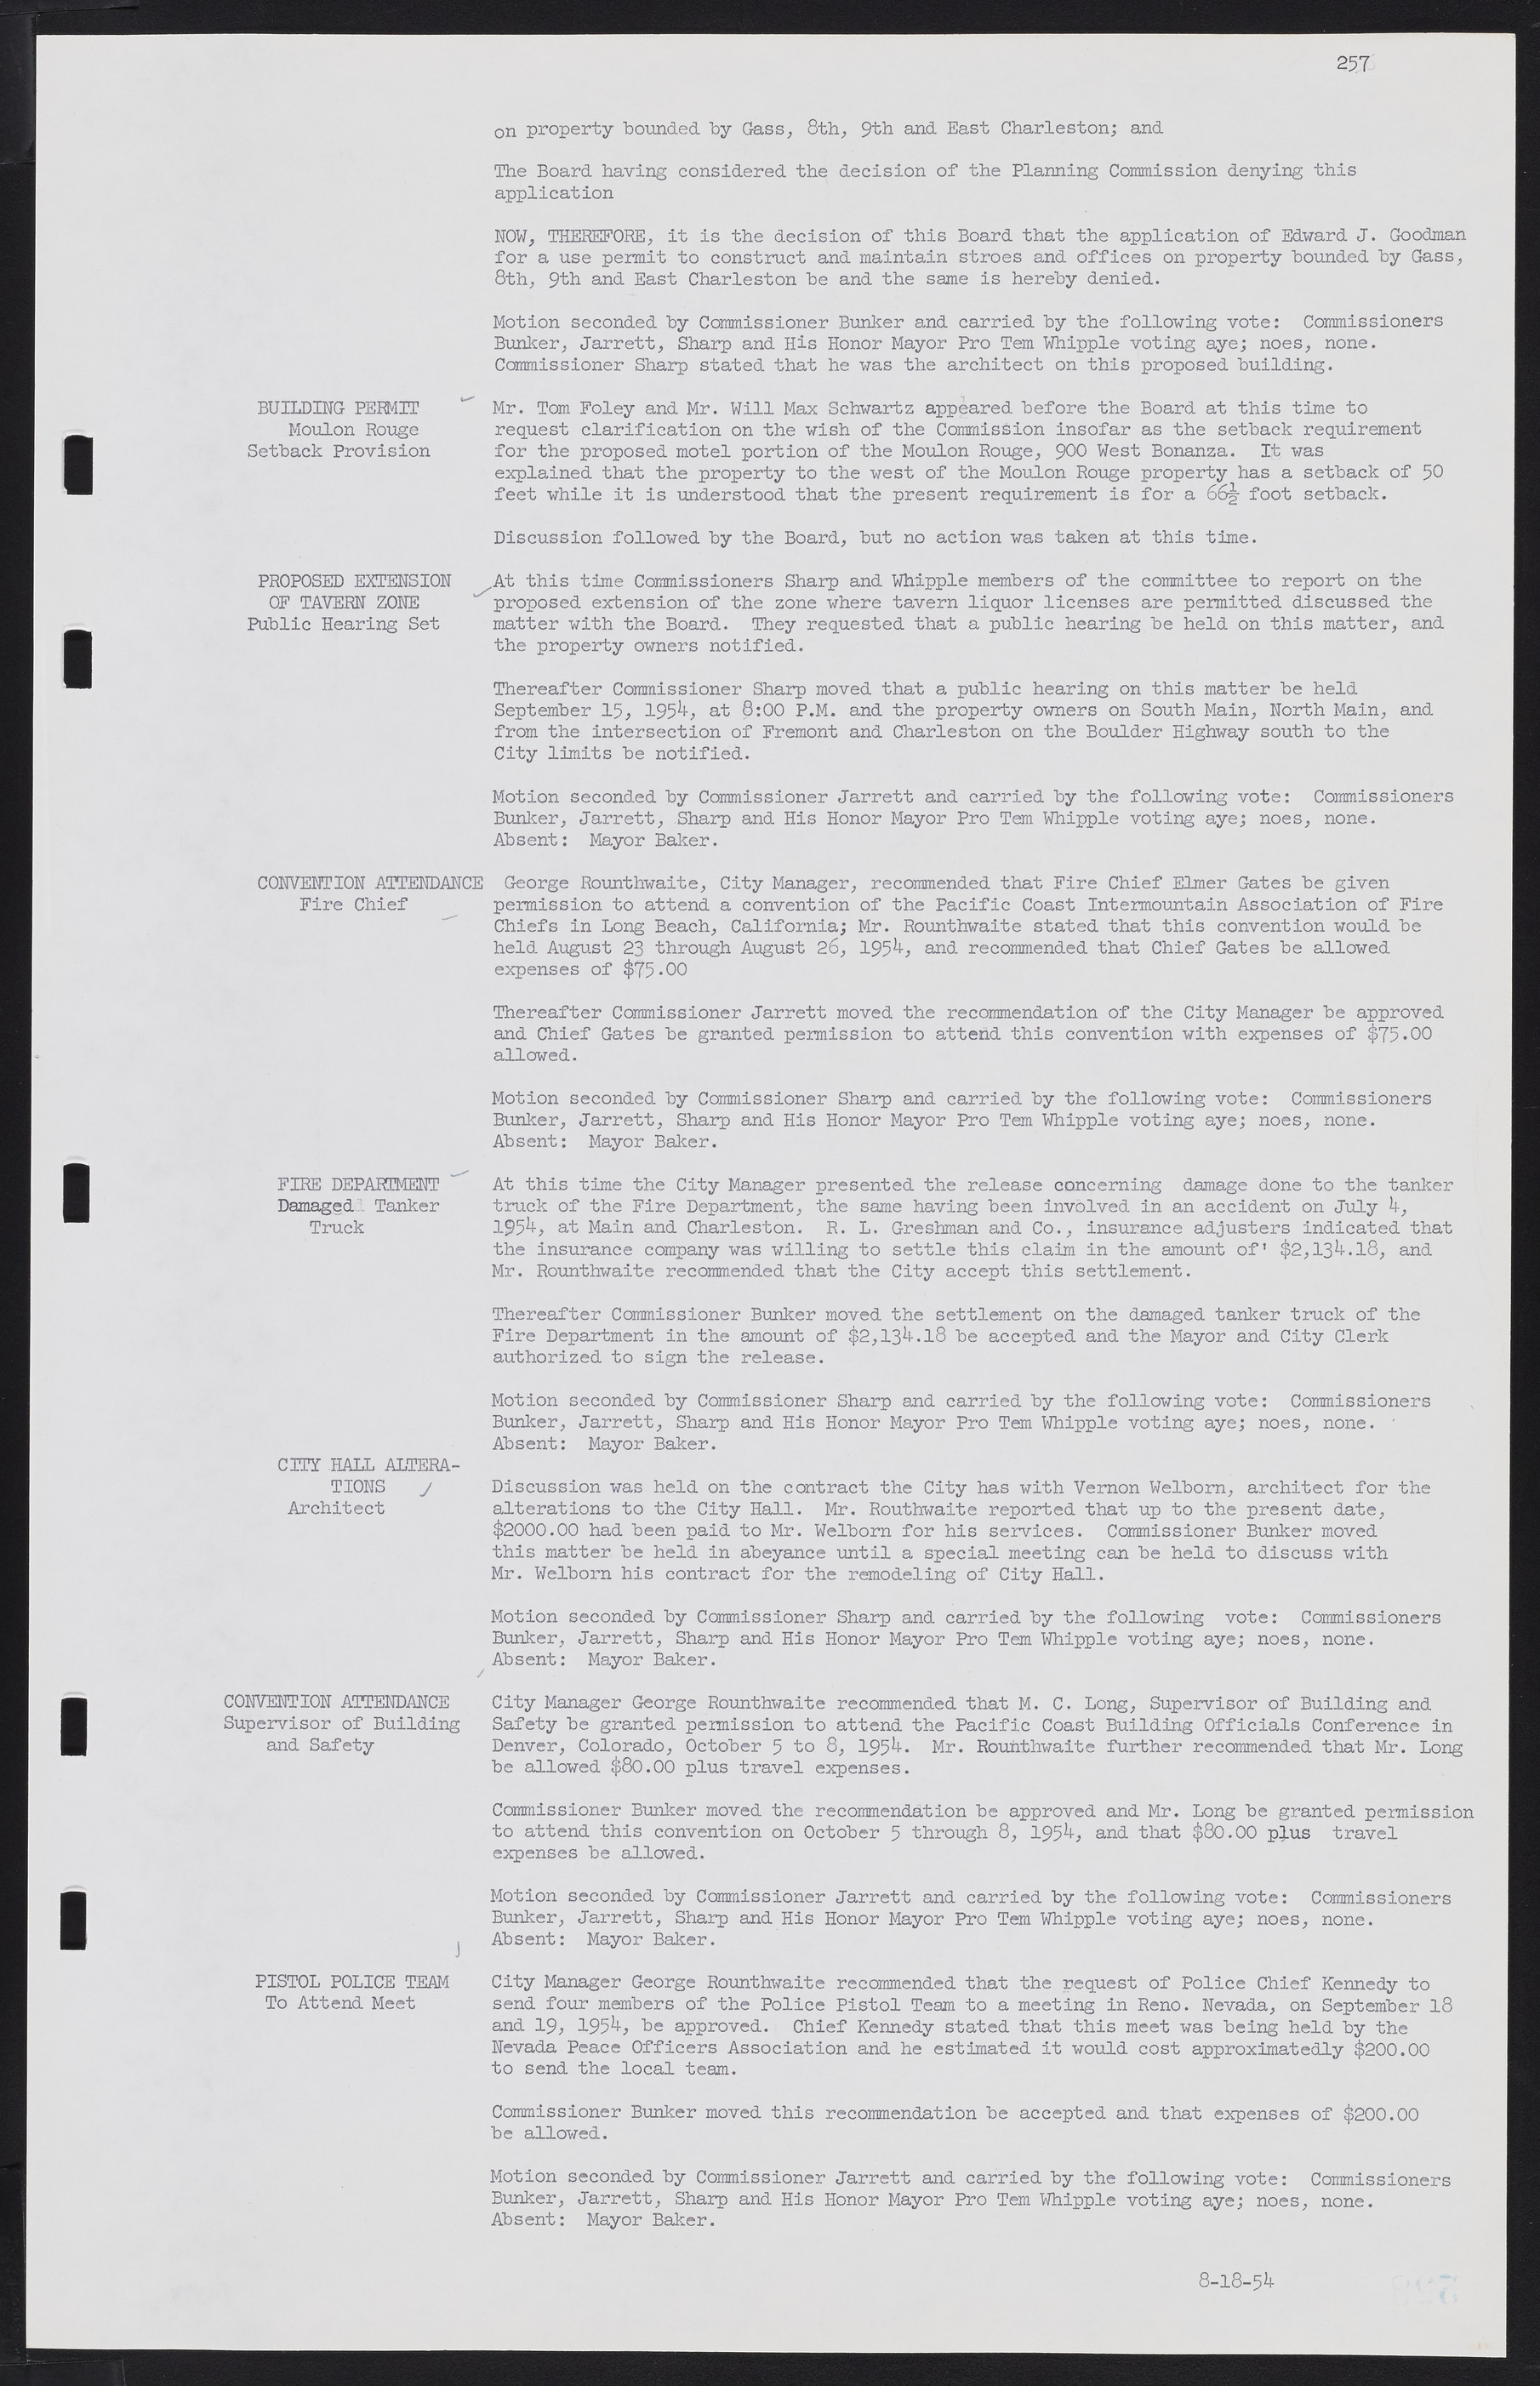 Las Vegas City Commission Minutes, February 17, 1954 to September 21, 1955, lvc000009-263